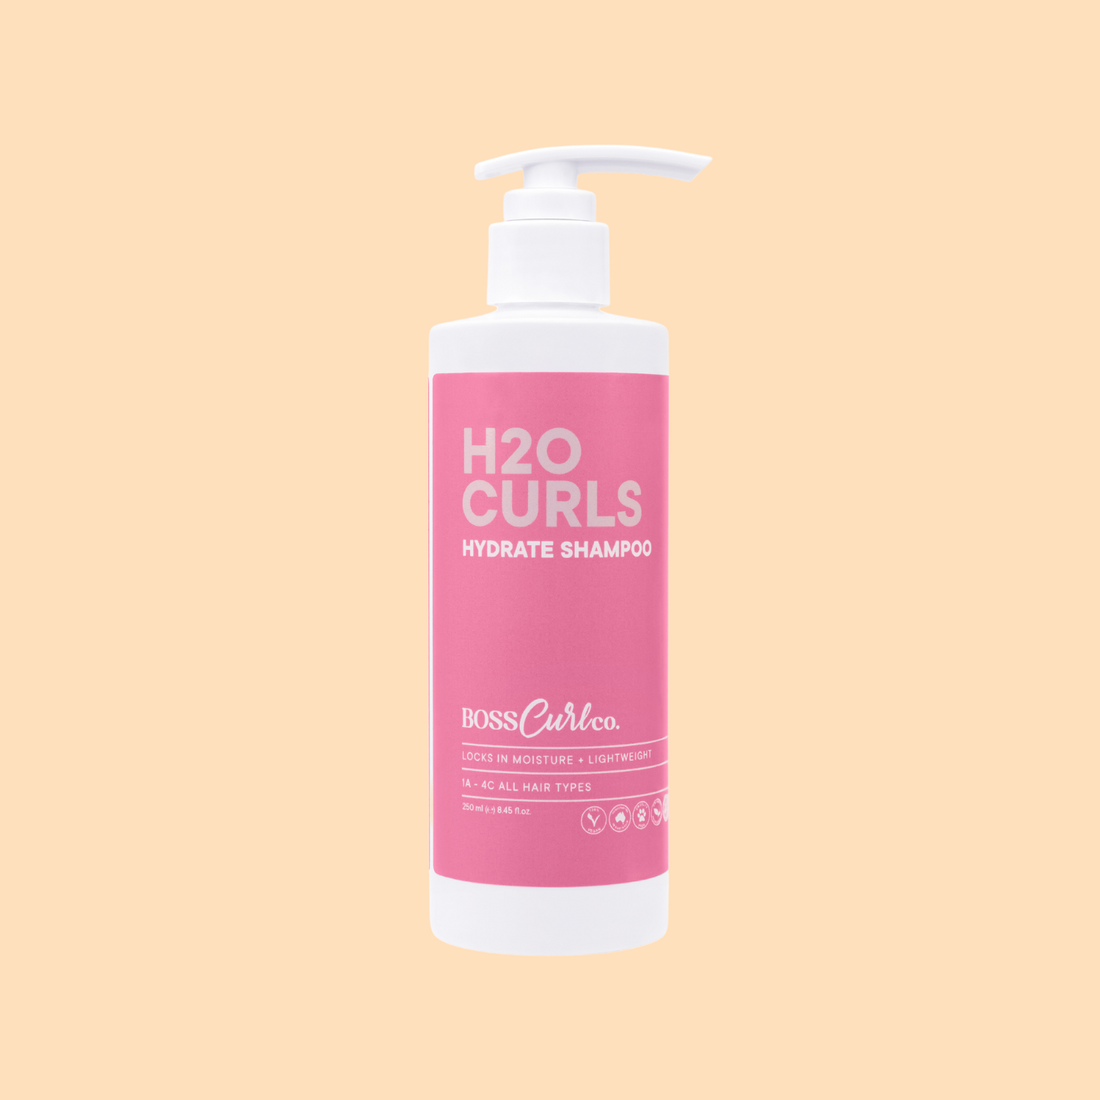 H20 Curls Hydrate Shampoo